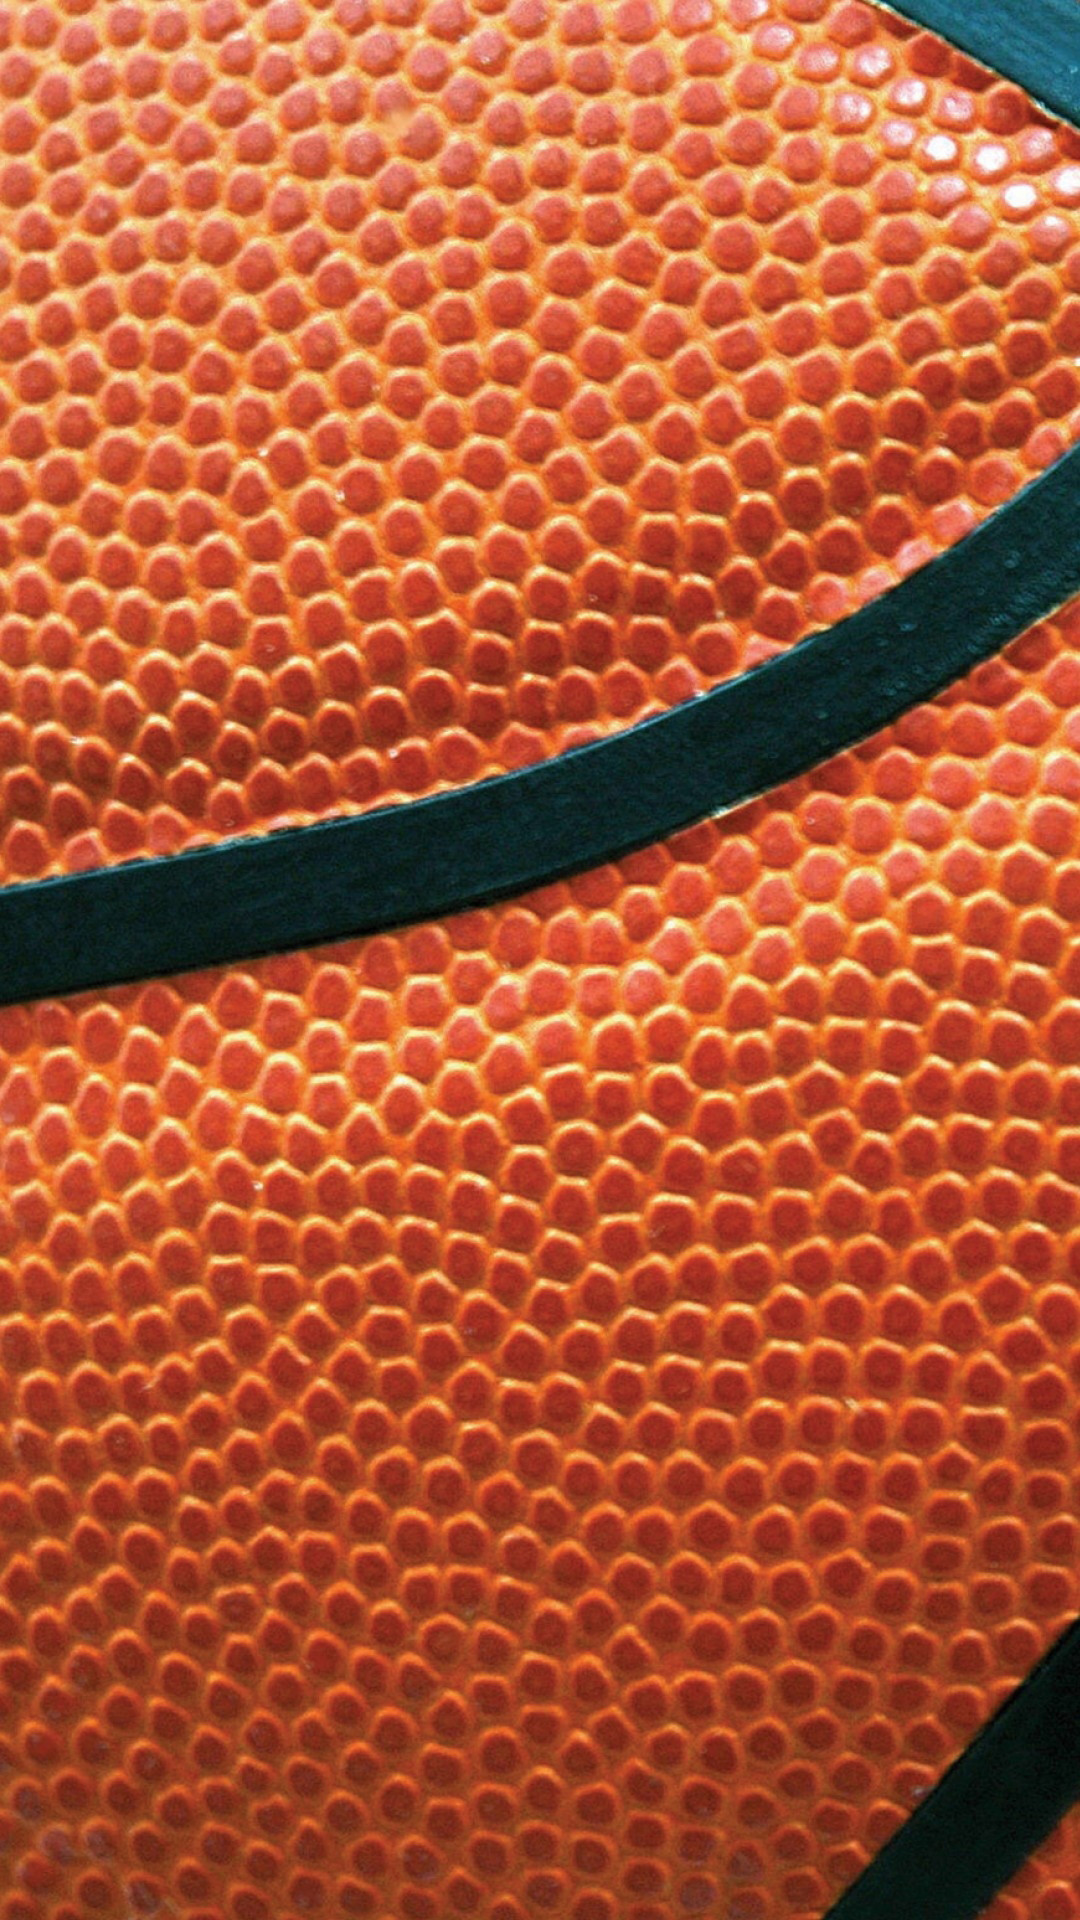 1080x1920 Basketball Close-up Android Wallpaper ...